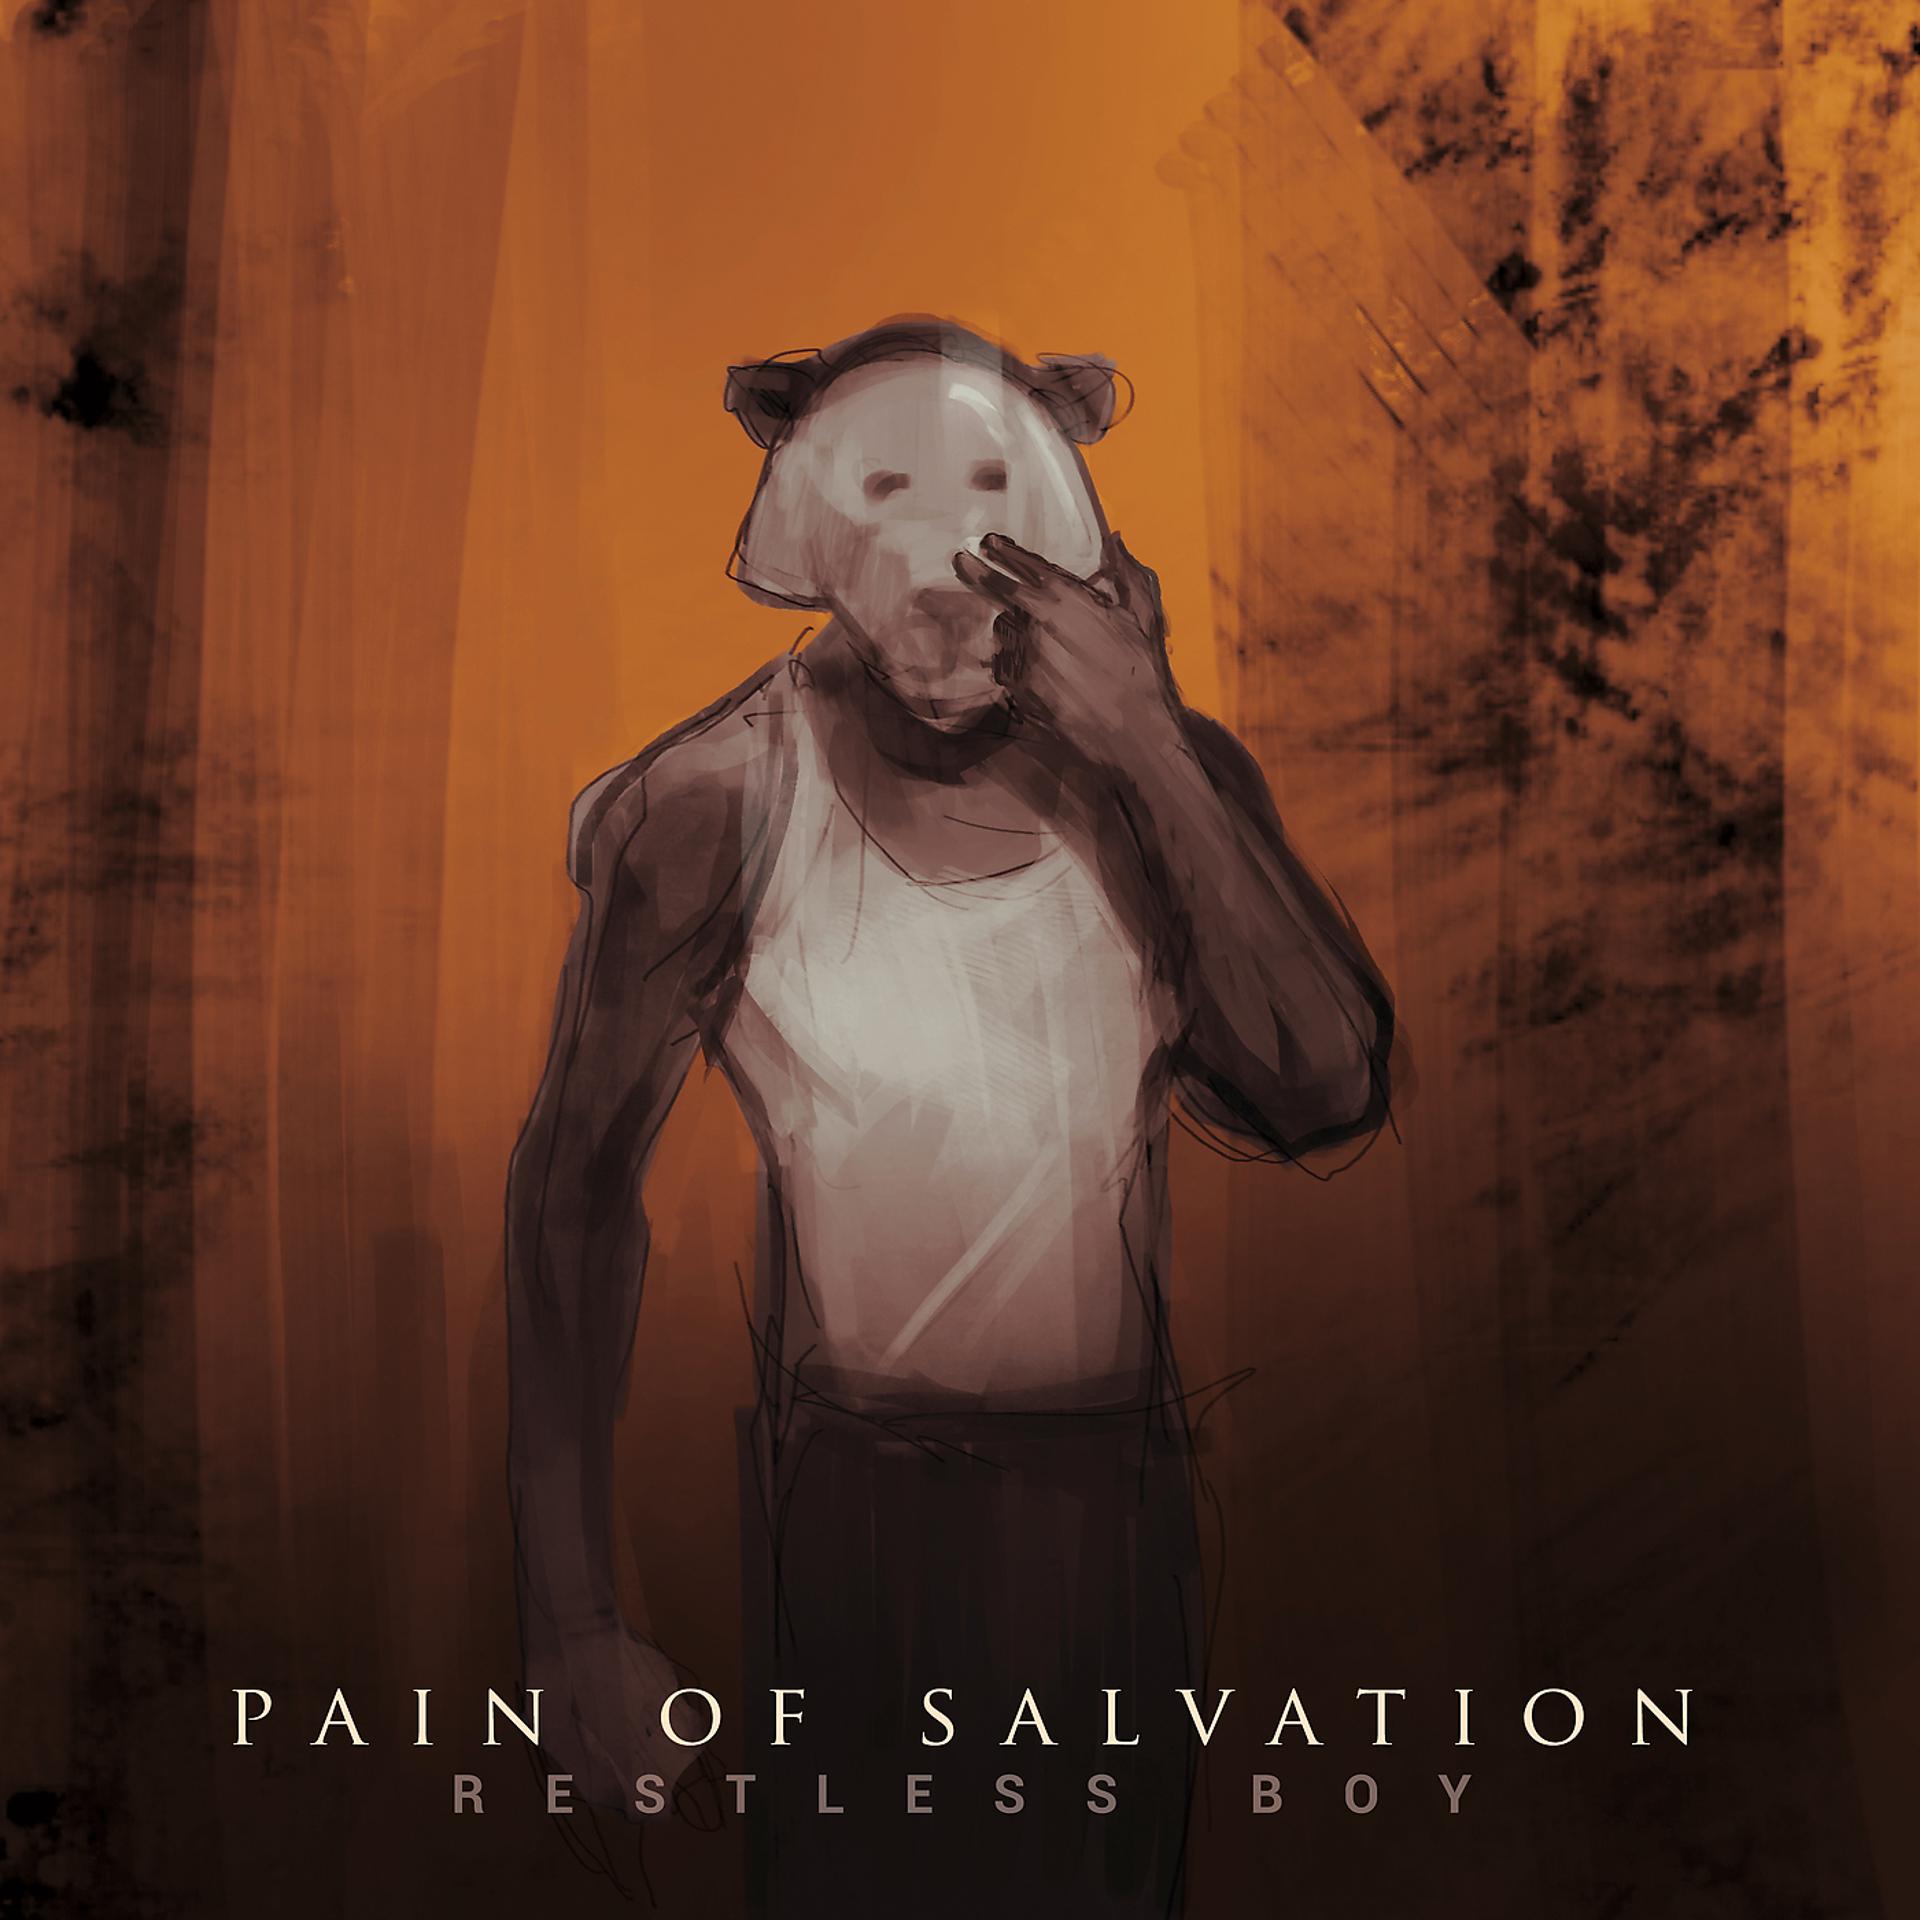 Boy pain. Pain of Salvation. Pain Boyz. Pain of Salvation альбомы. Restless рисунок.